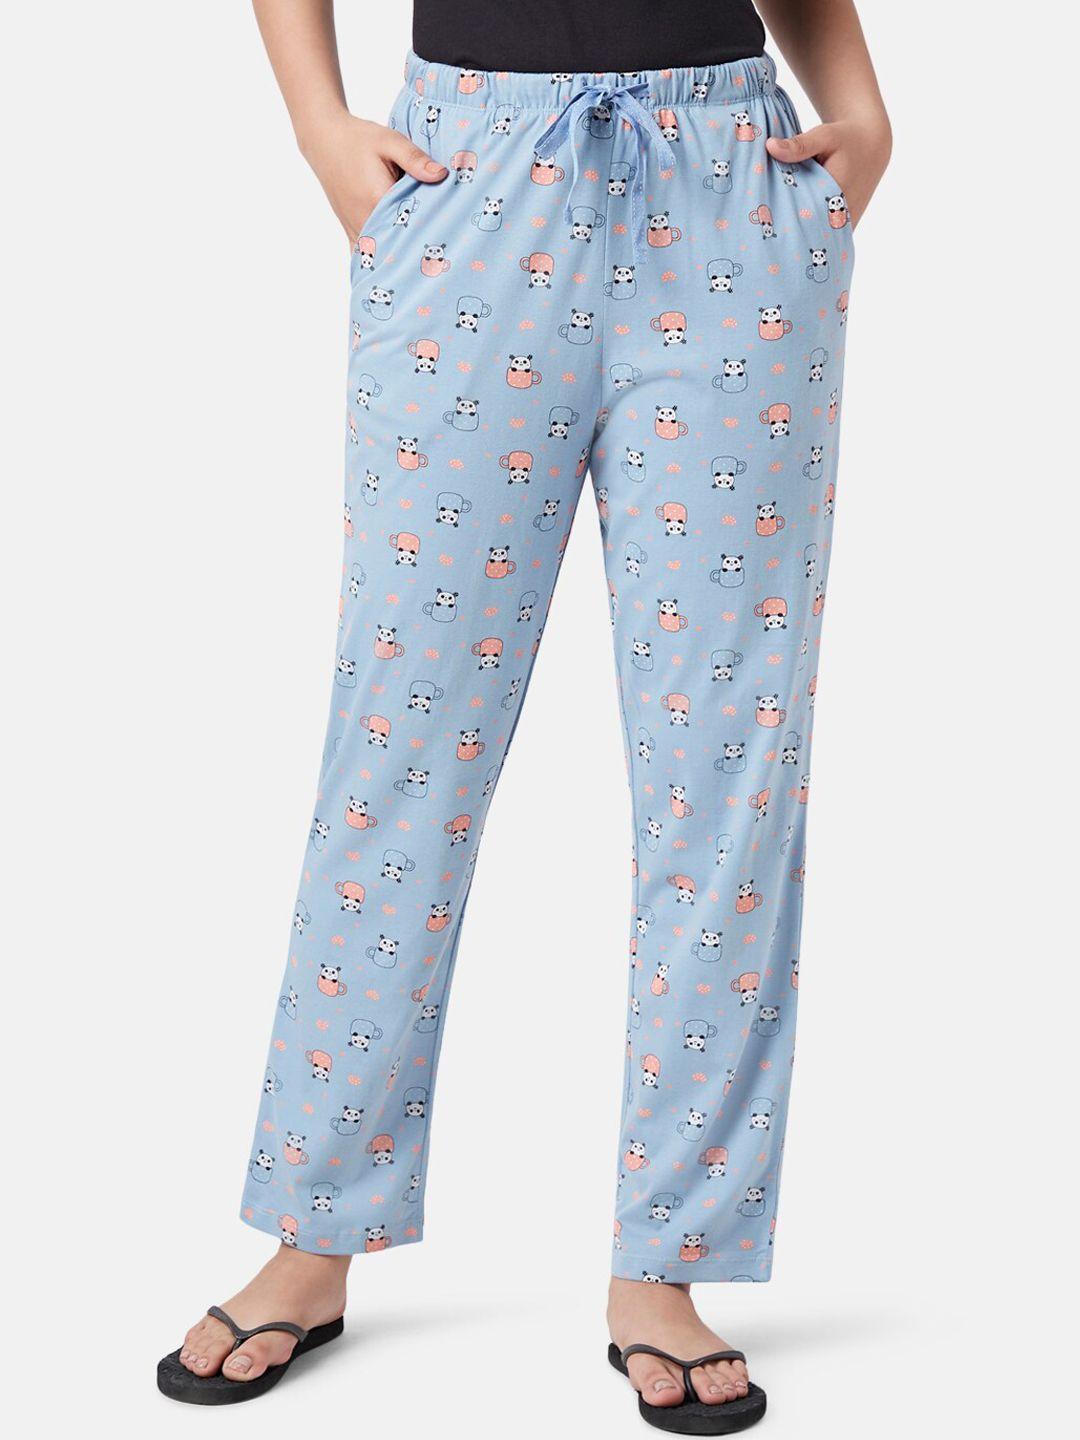 dreamz by pantaloons floral printed mid rise cotton pyjamas